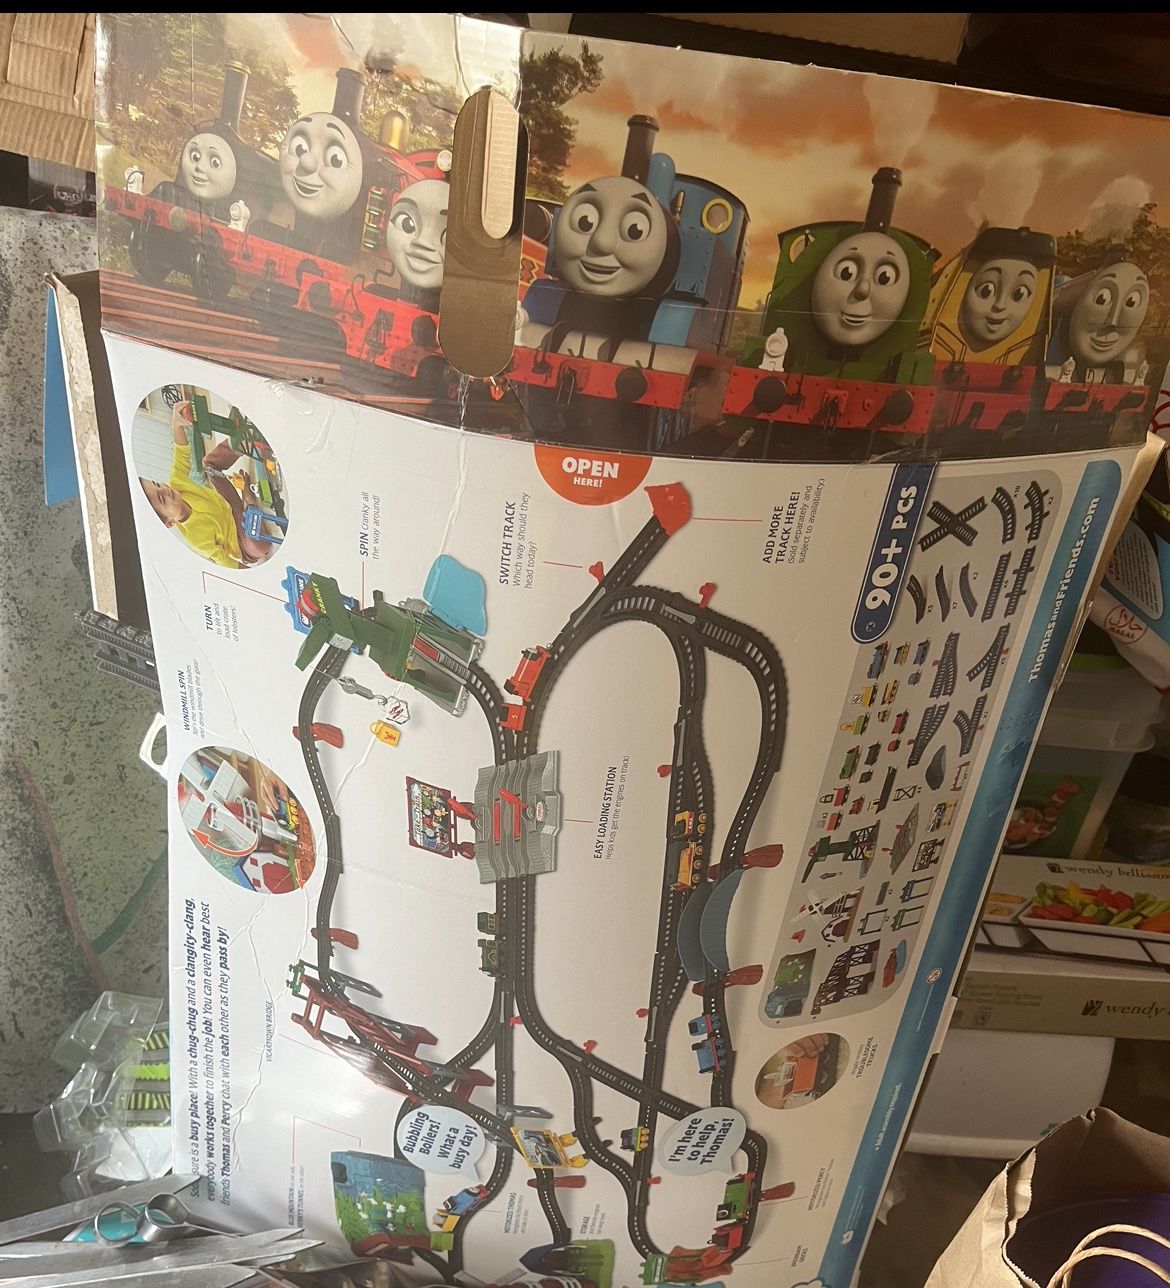 Thomas & Friends Train Toy 